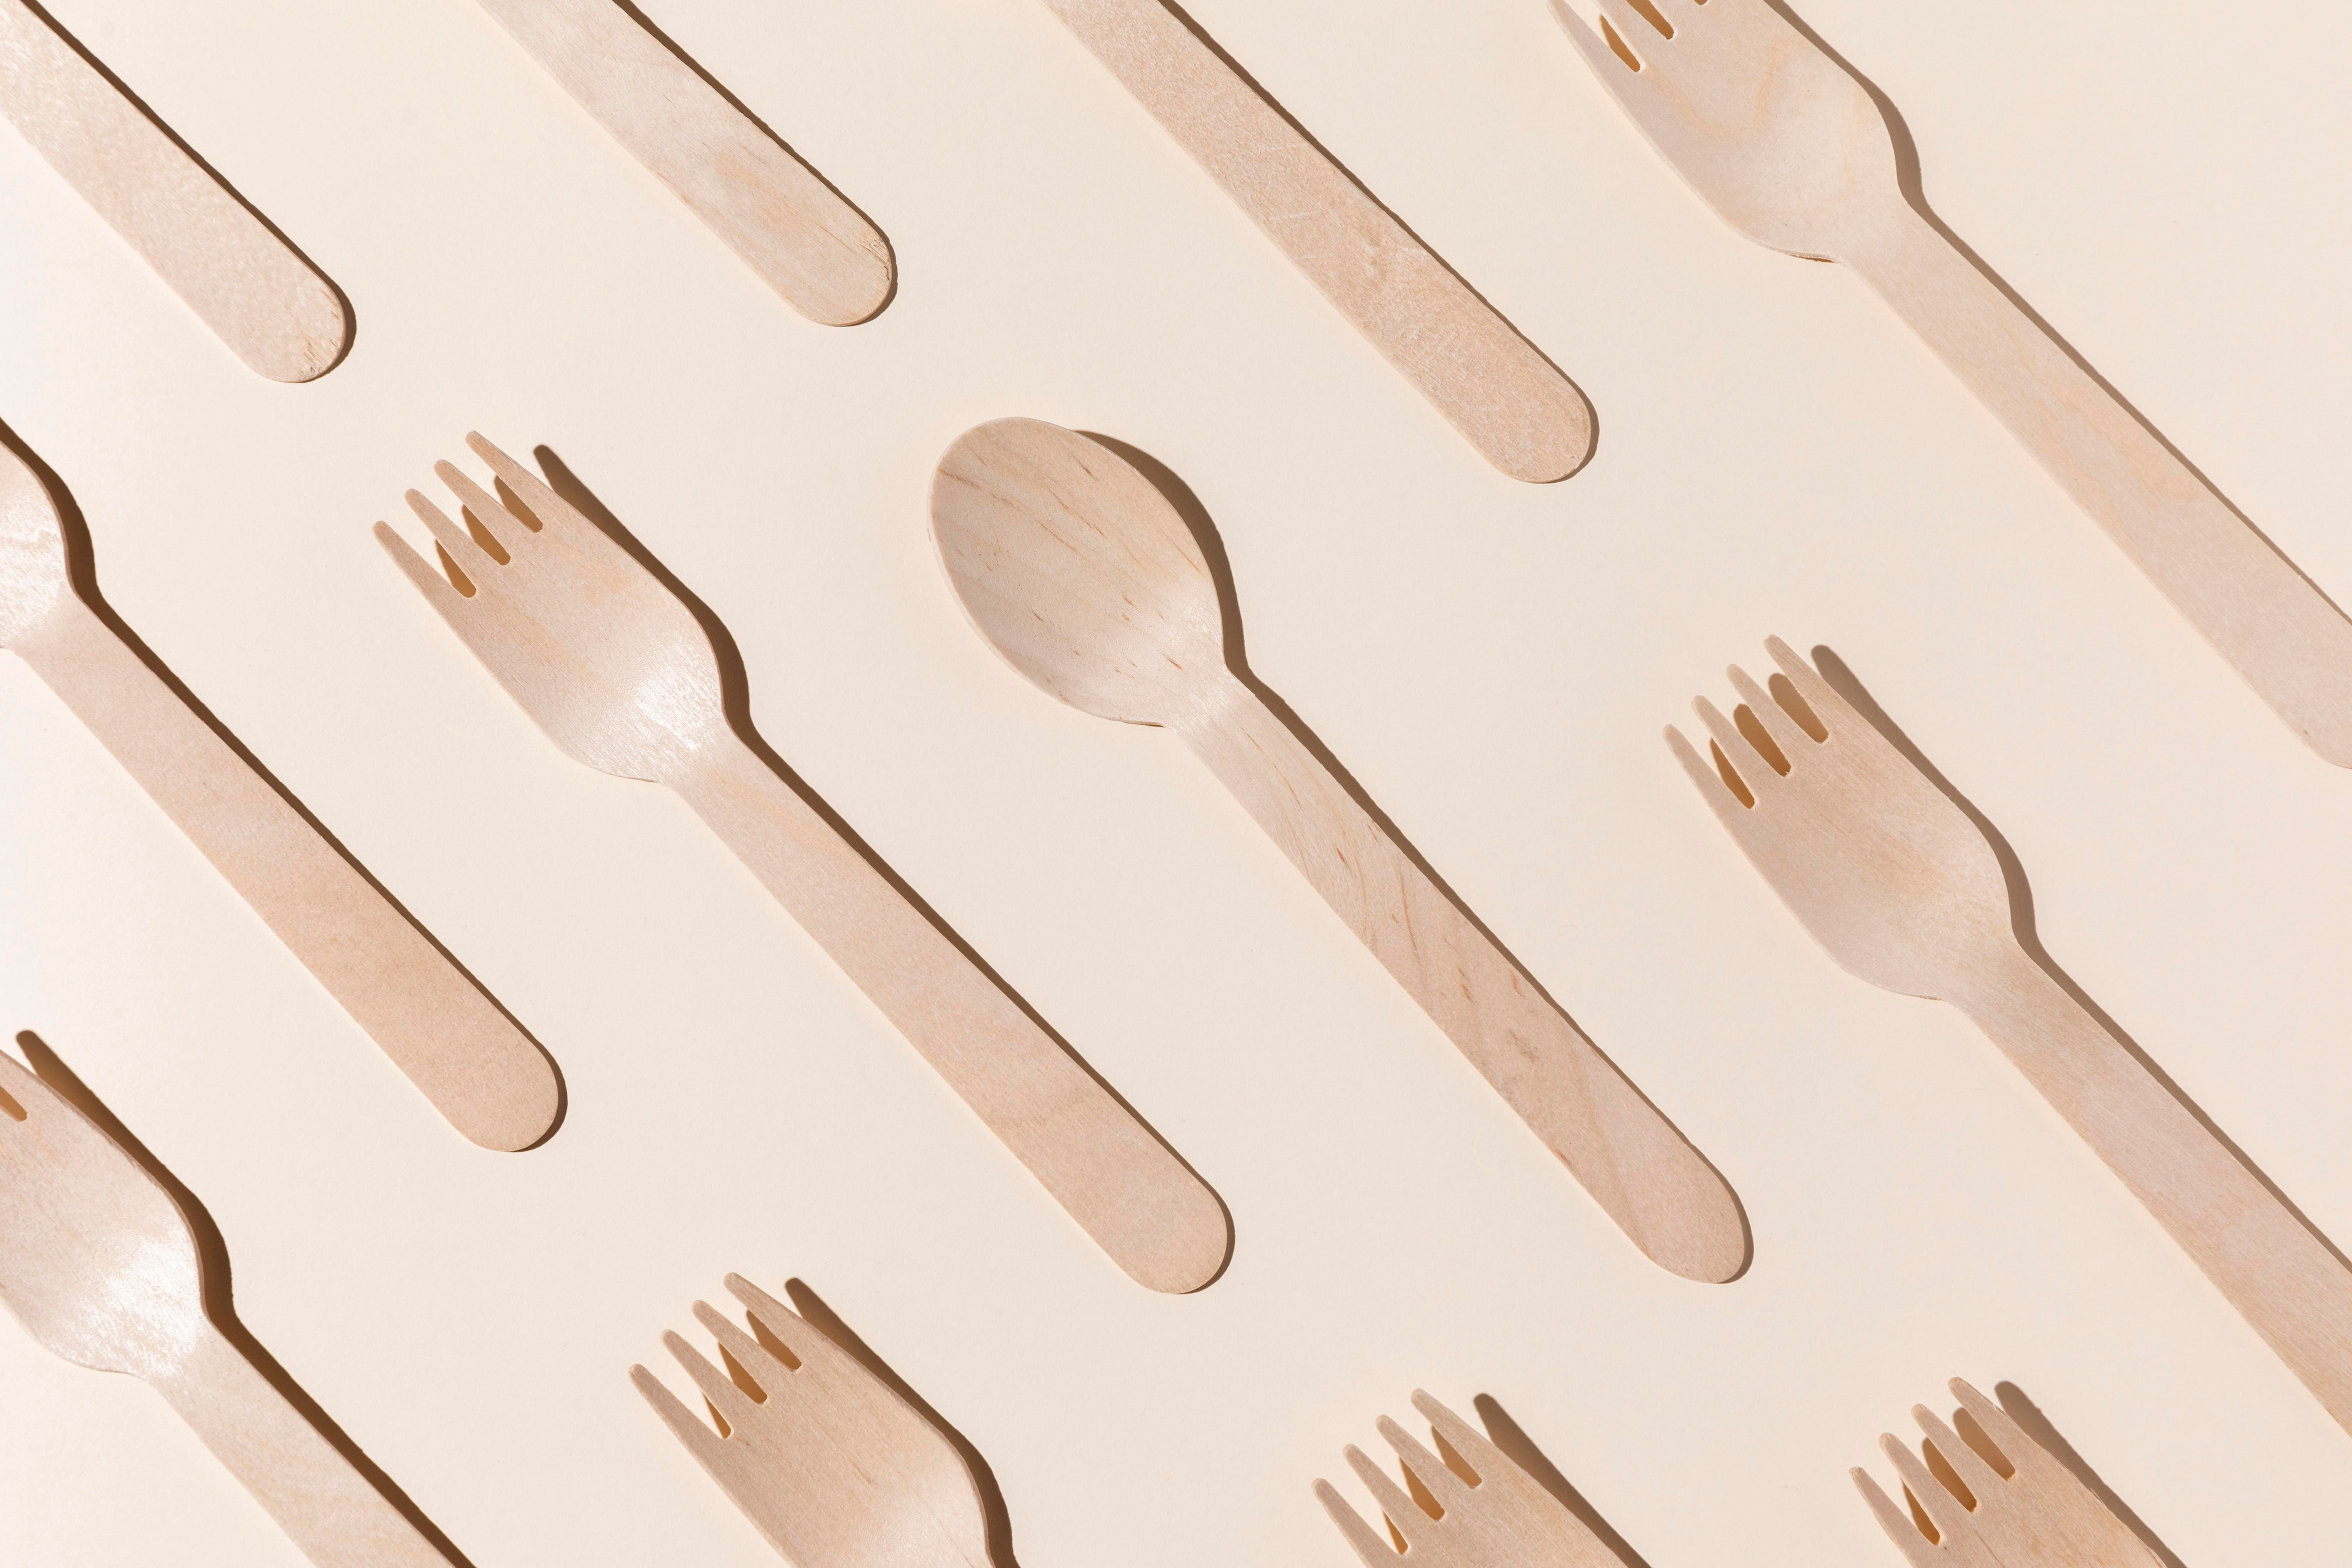 bio cardboard forks spoons